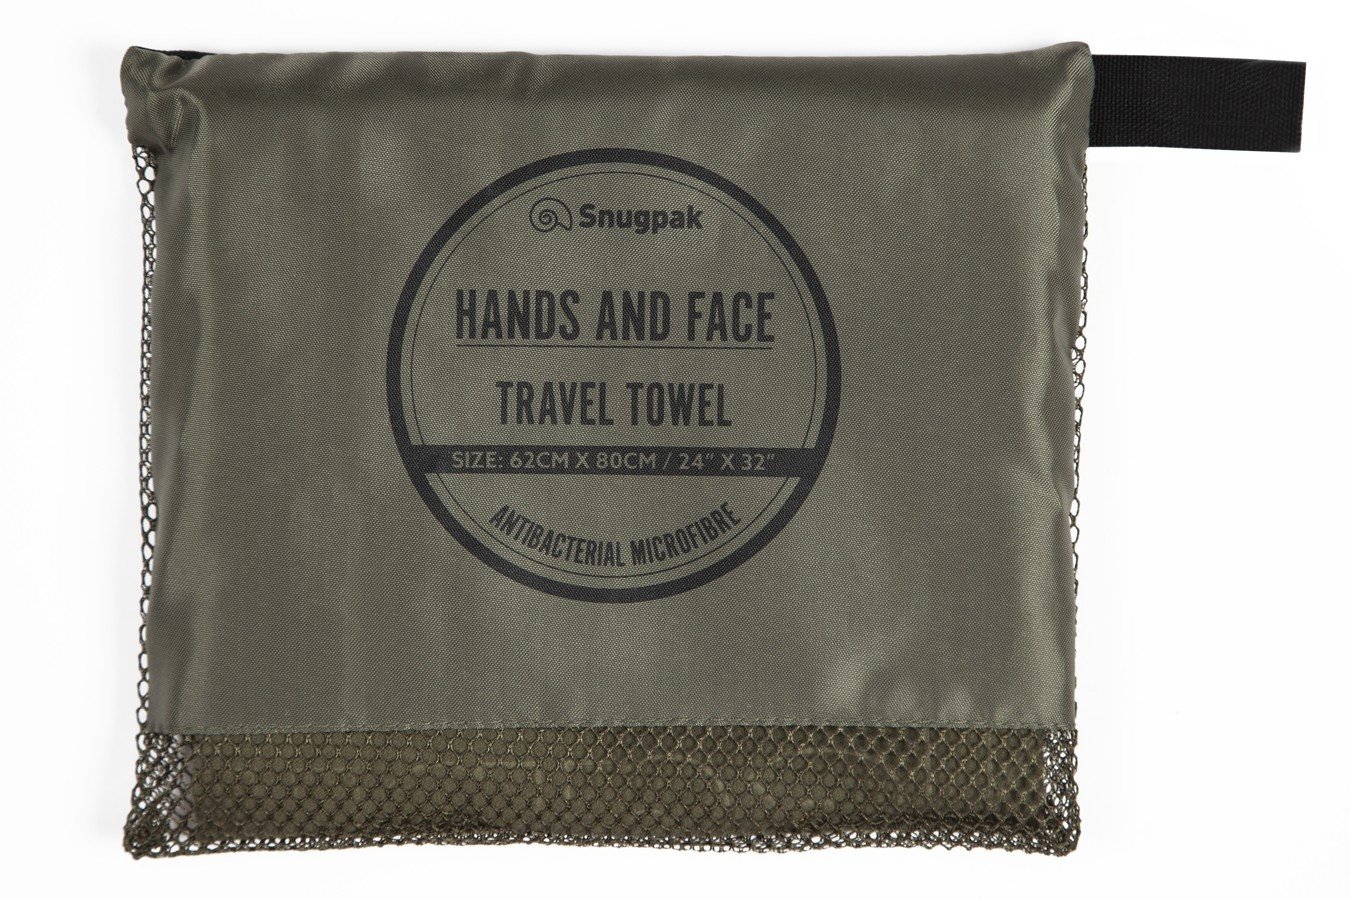 Snugpak Travel Towel Hands and Face Olive